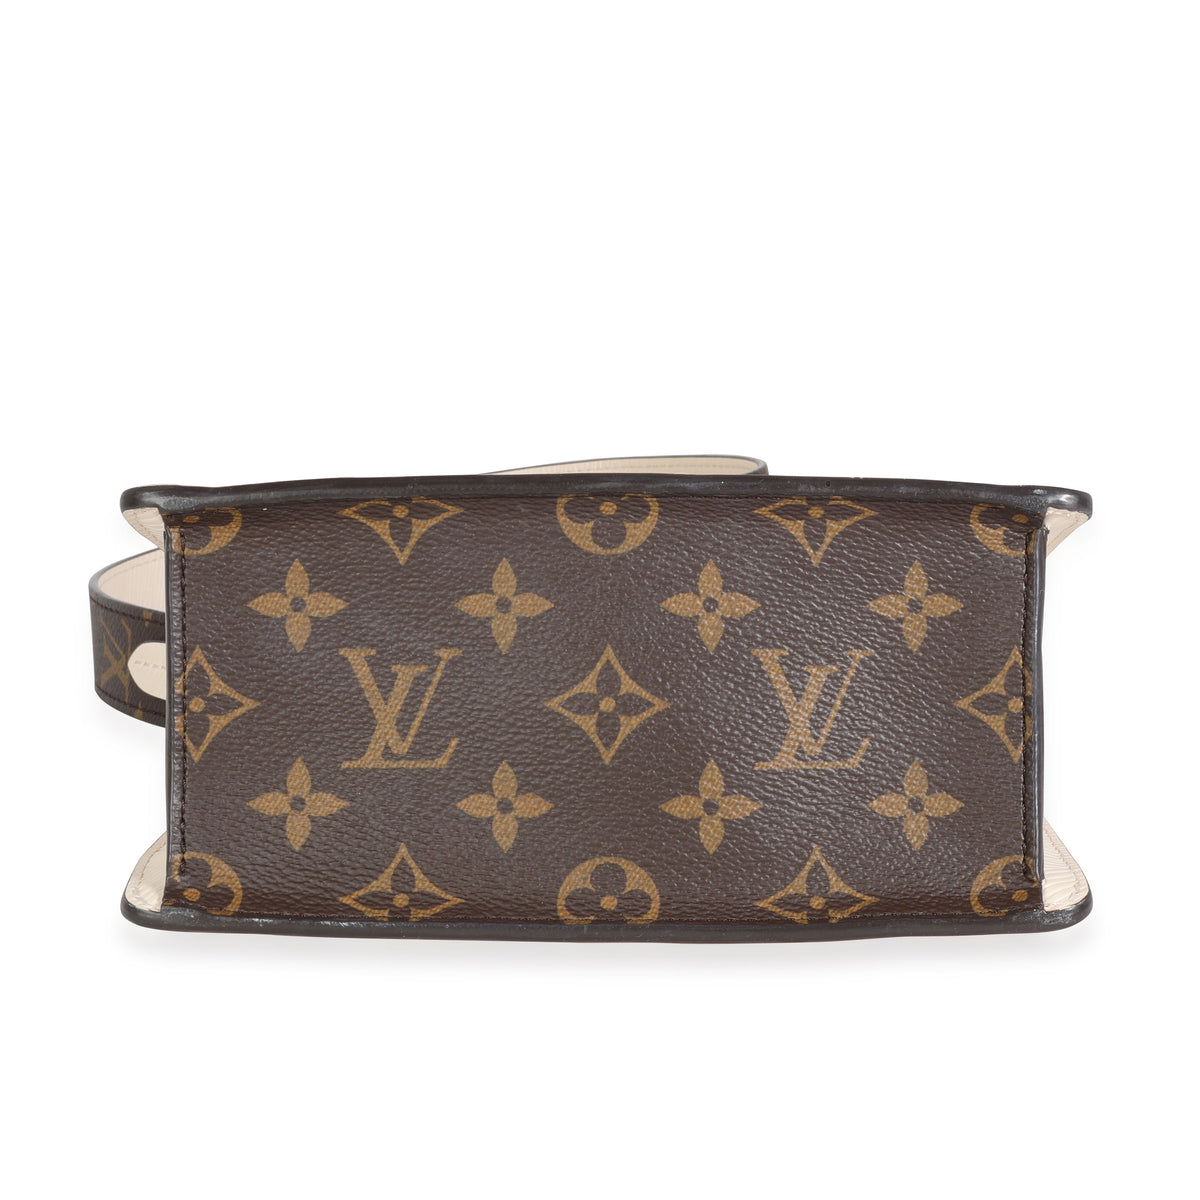  Louis Vuitton M90468 Handbag, Spring Street, PM, Pink, ROSE  BALLERINE : Clothing, Shoes & Jewelry